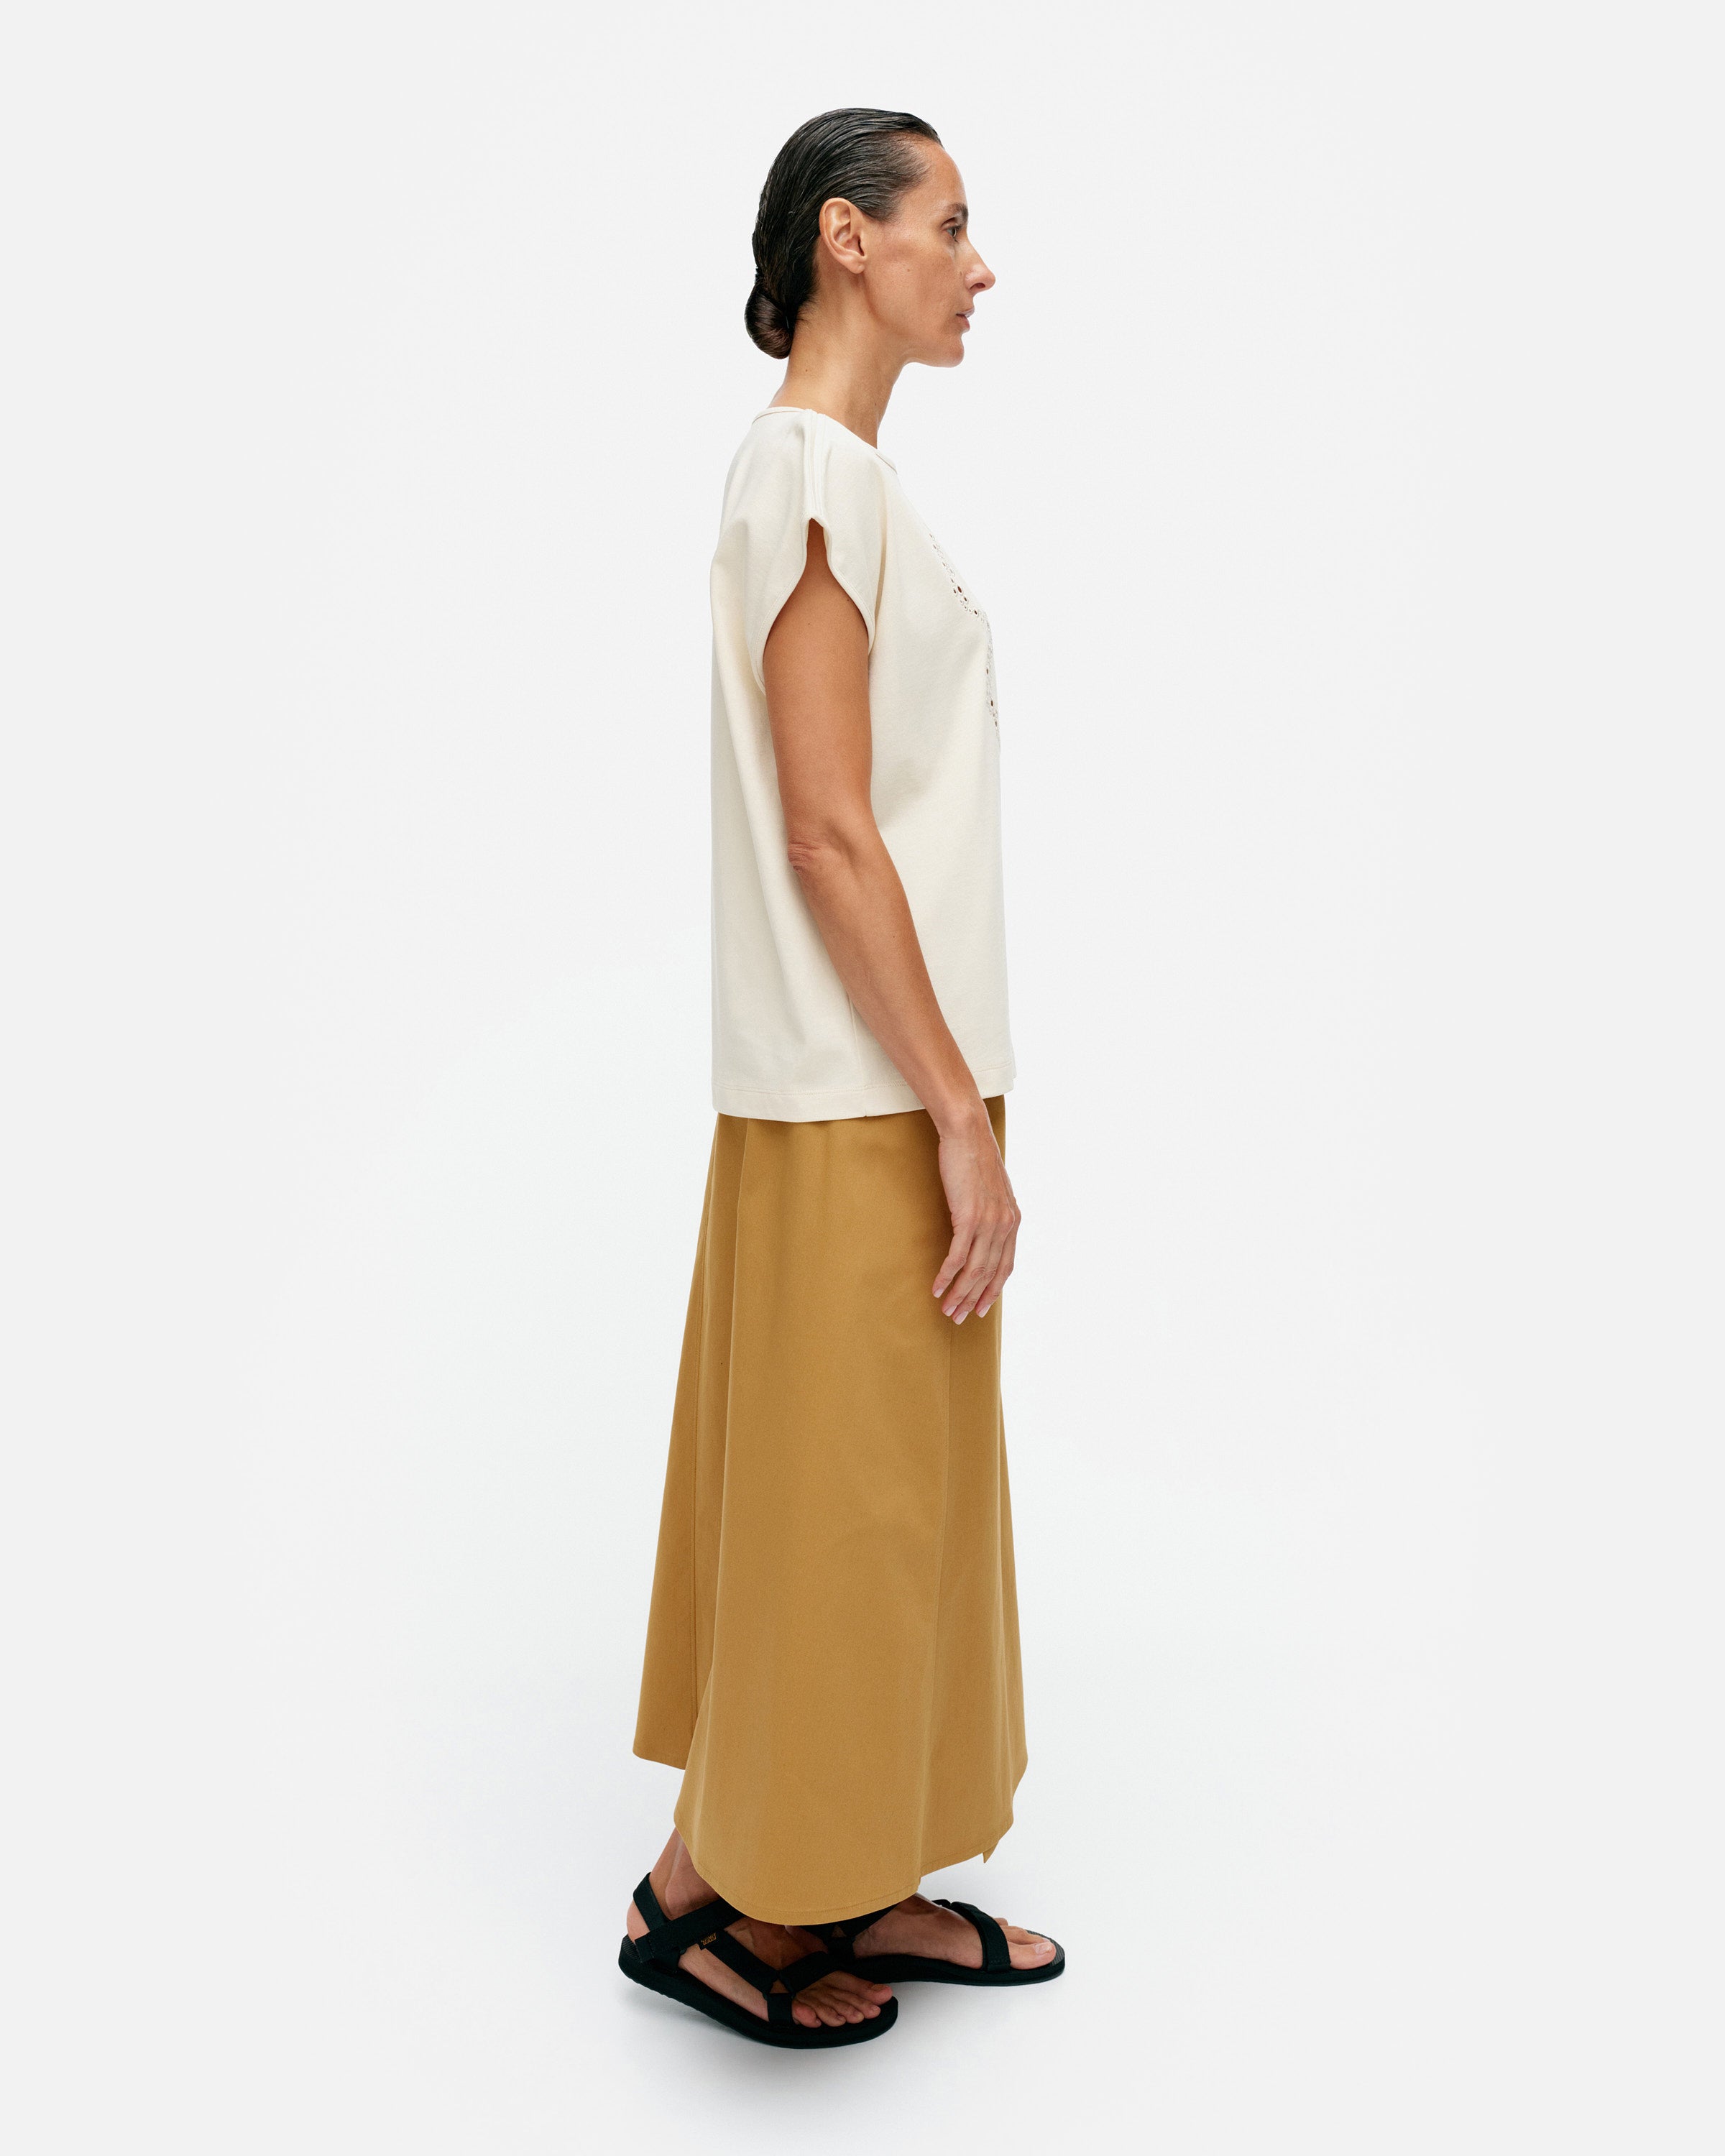 Jeansa Unikko Oversized Jersey Short Sleeve Top 60cm